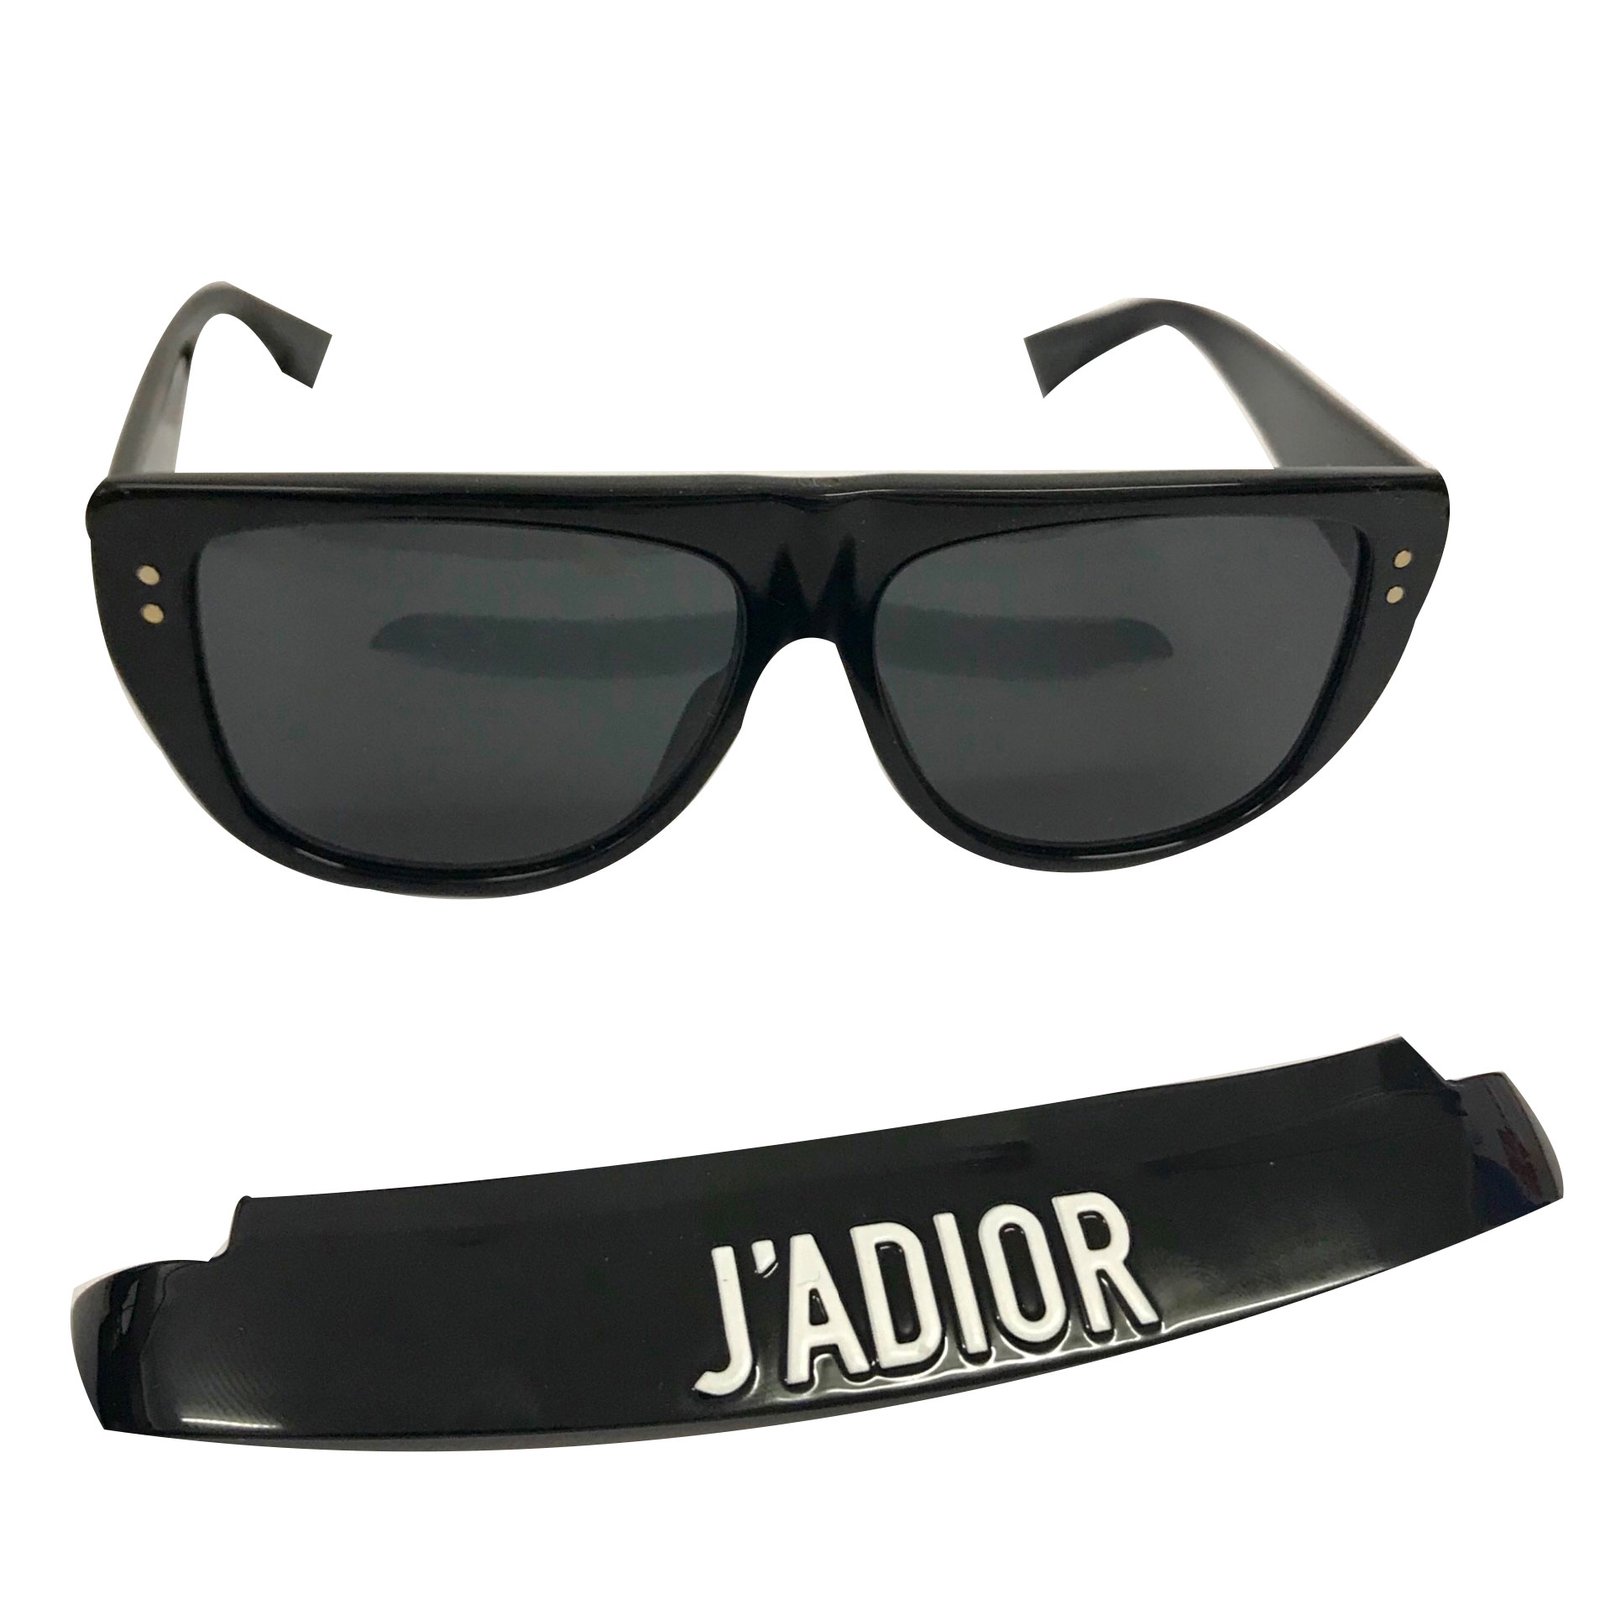 dior club 2 sunglasses price